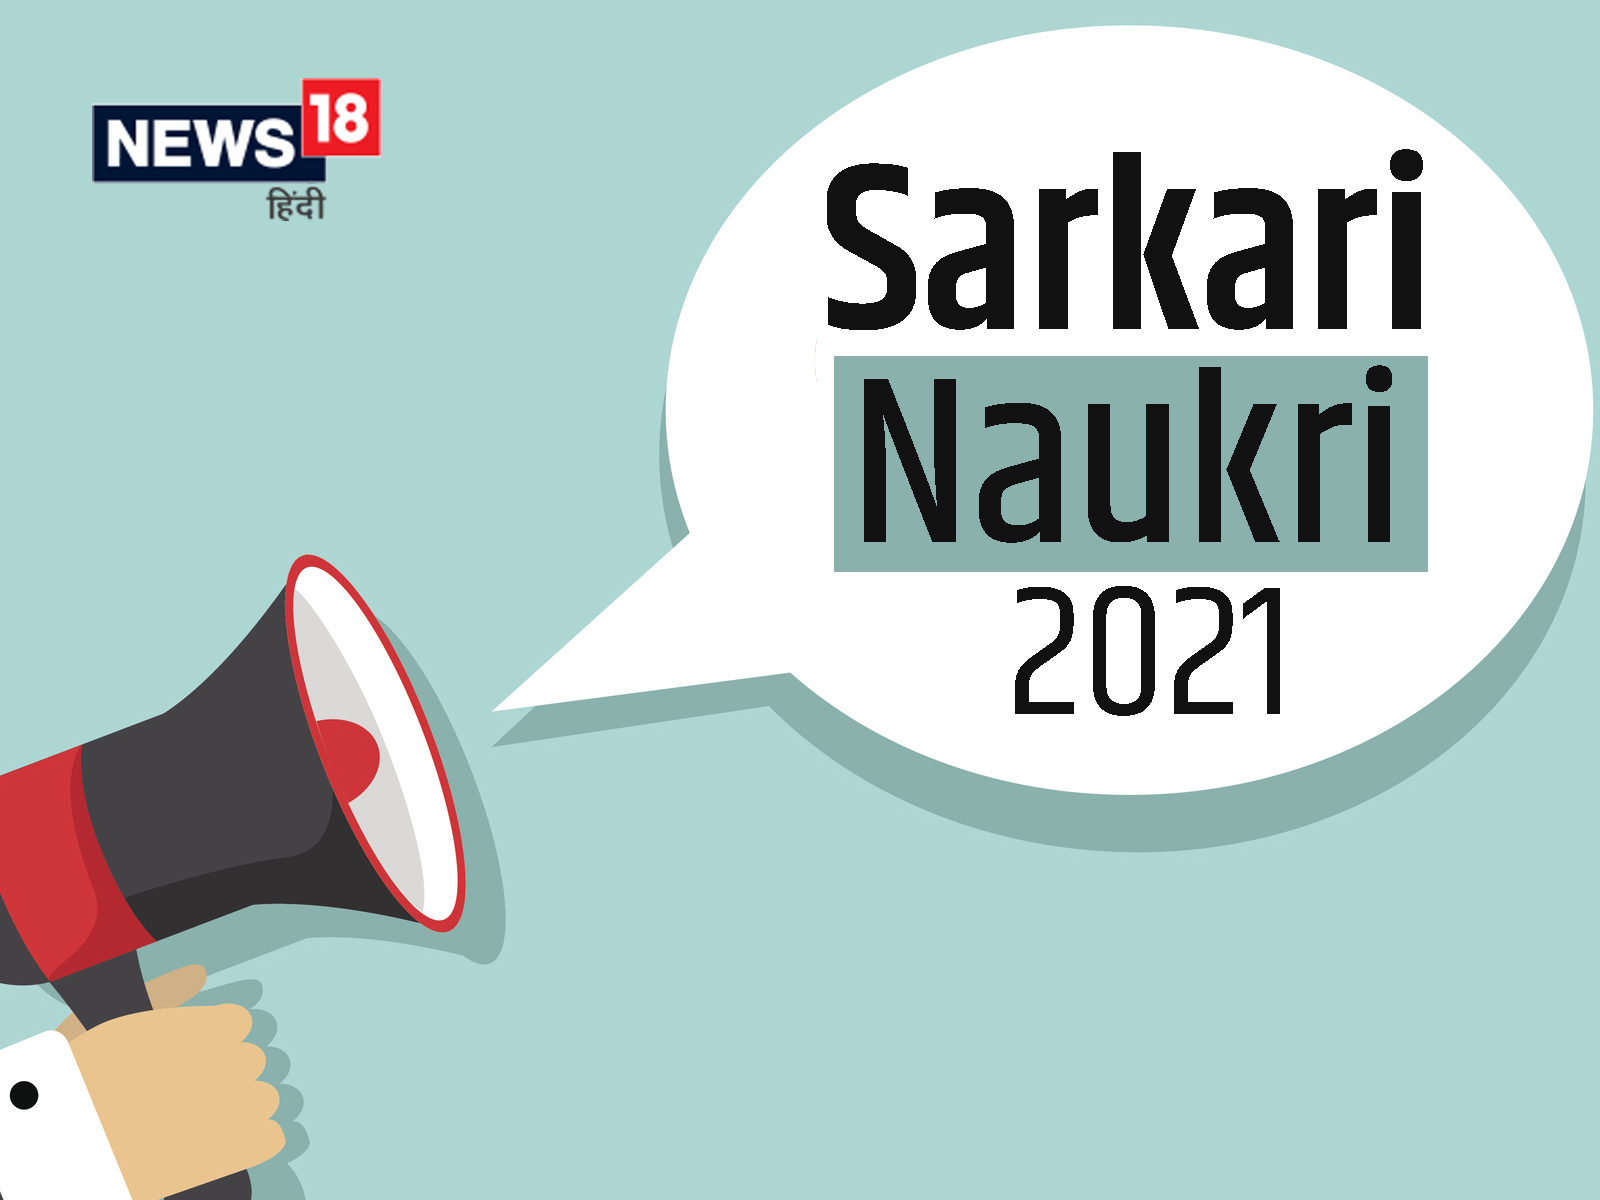 Sarkari Naukri 2021: अभ्यर्थी निर्धारित अंतिम तिथि तक आवेदन कर सकती है.